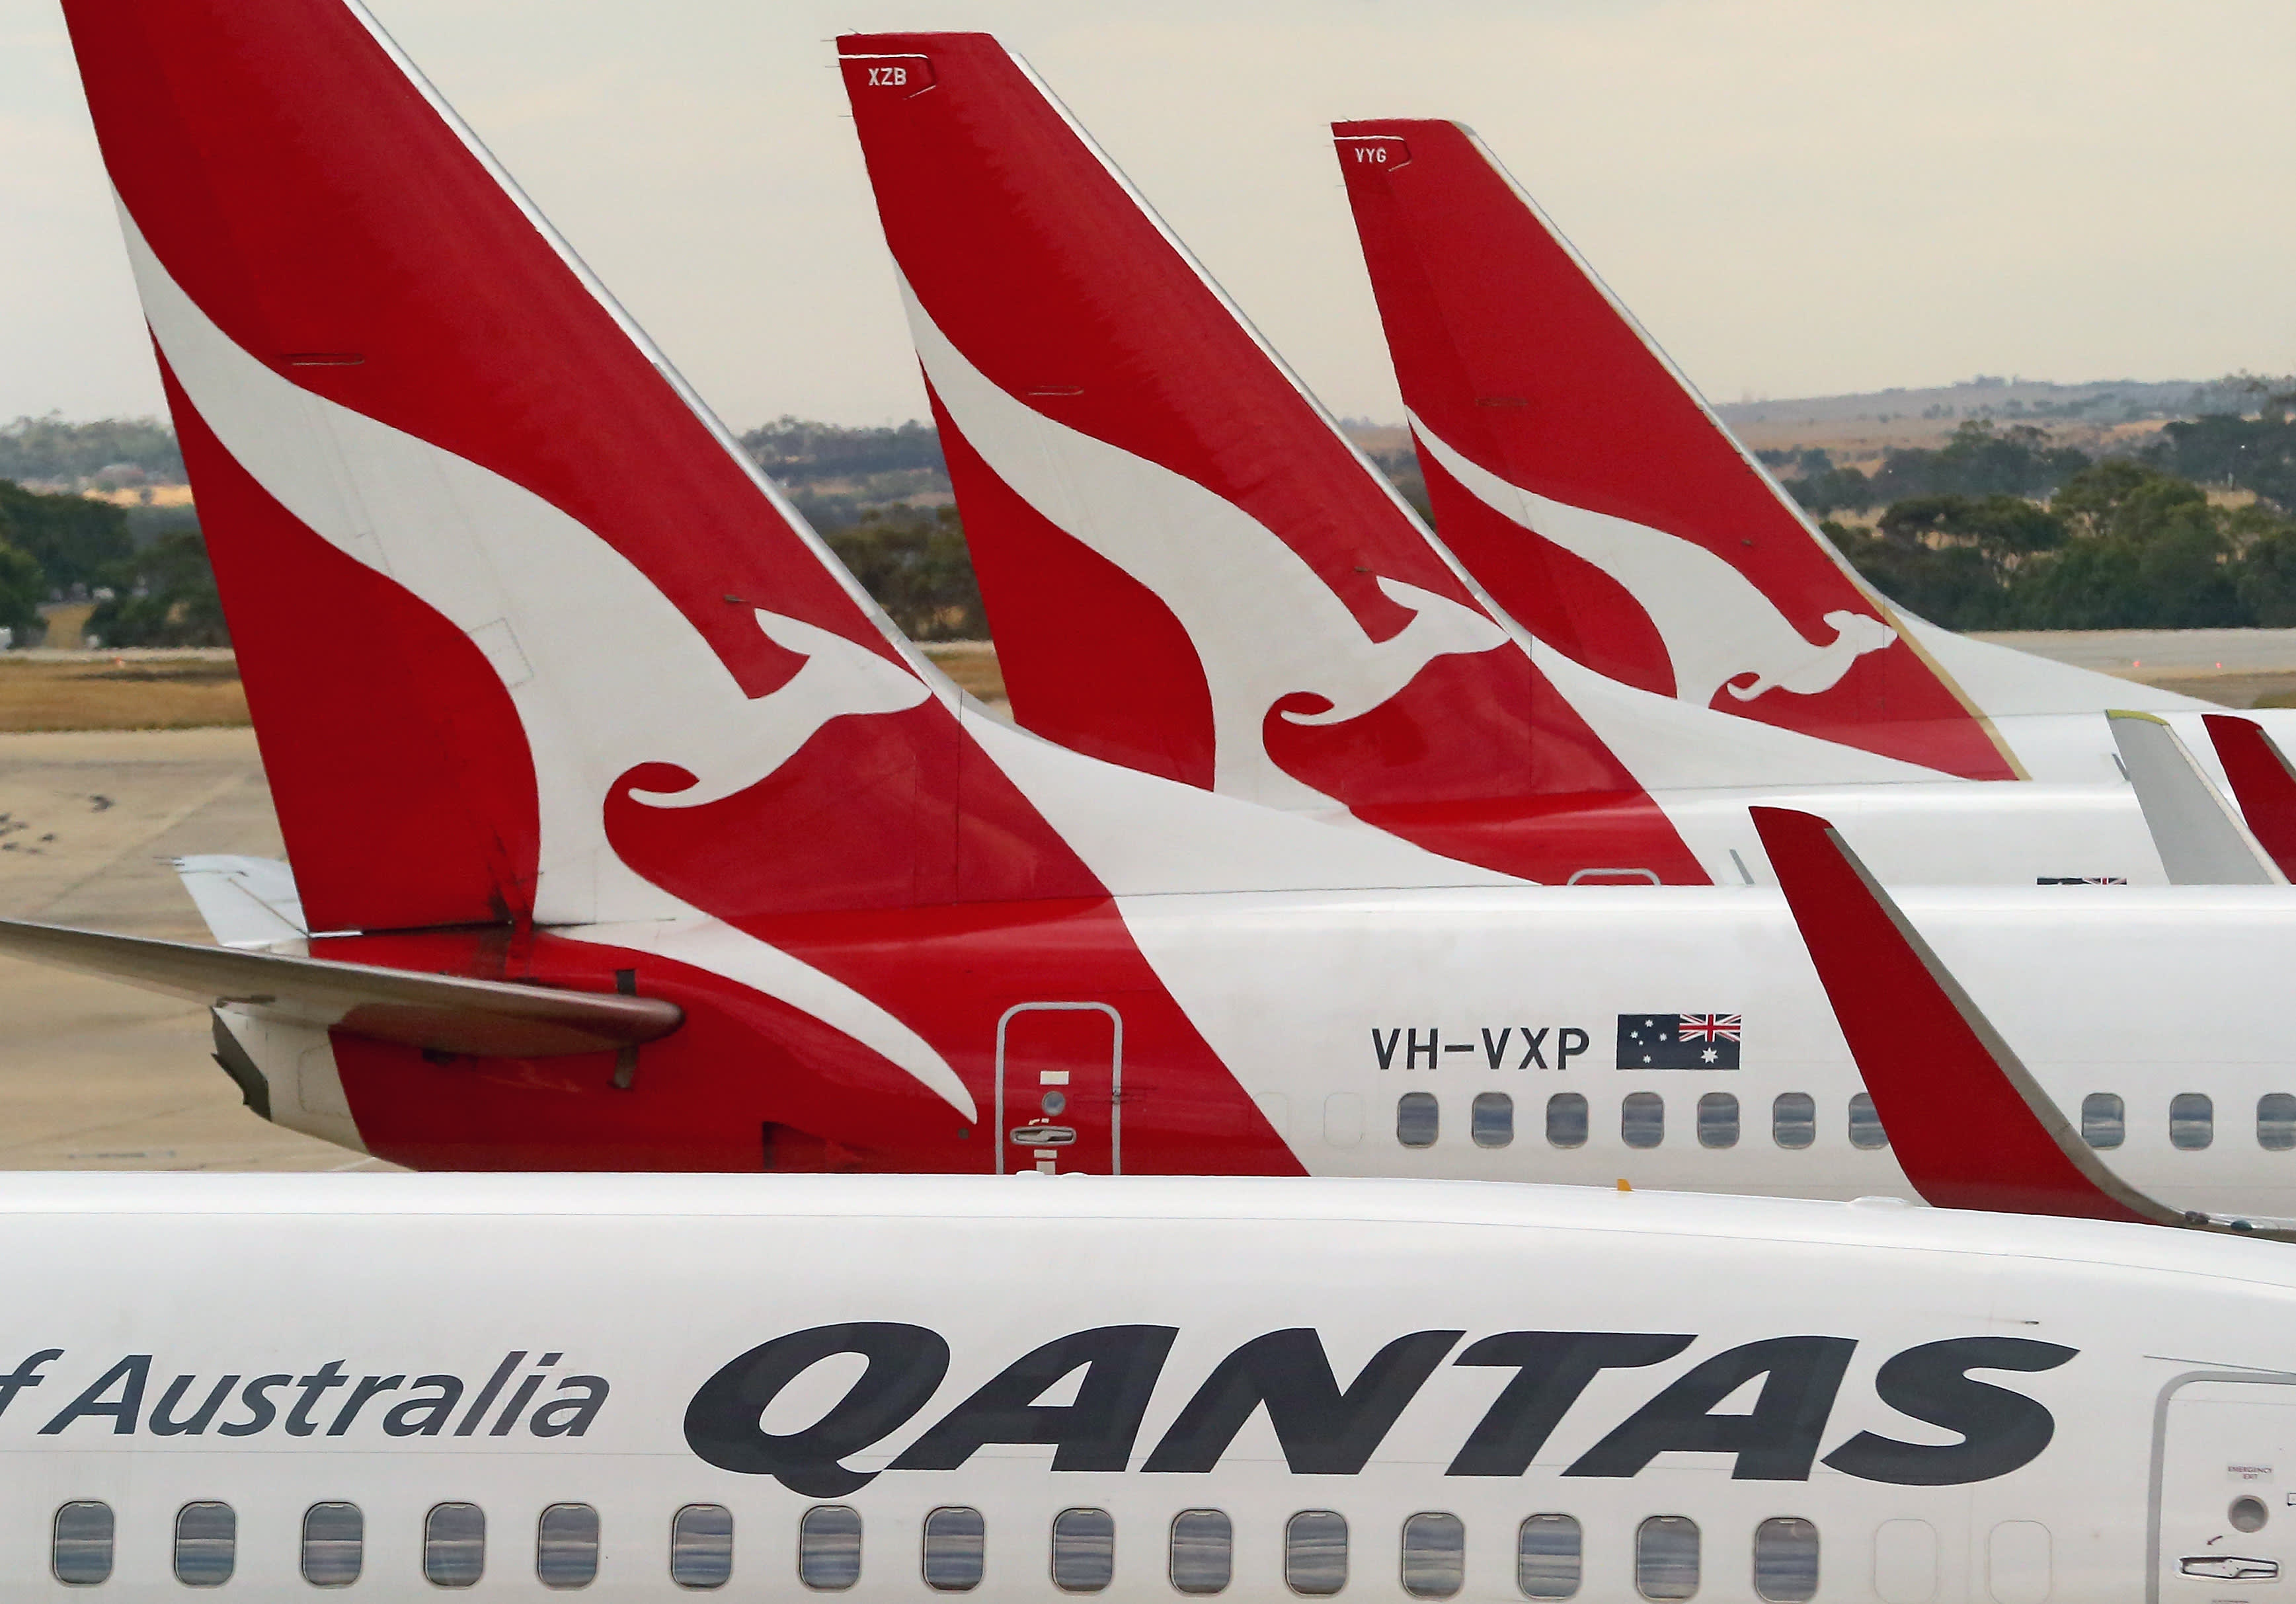 Australia Qantas preparing for international flights from December, CEO says